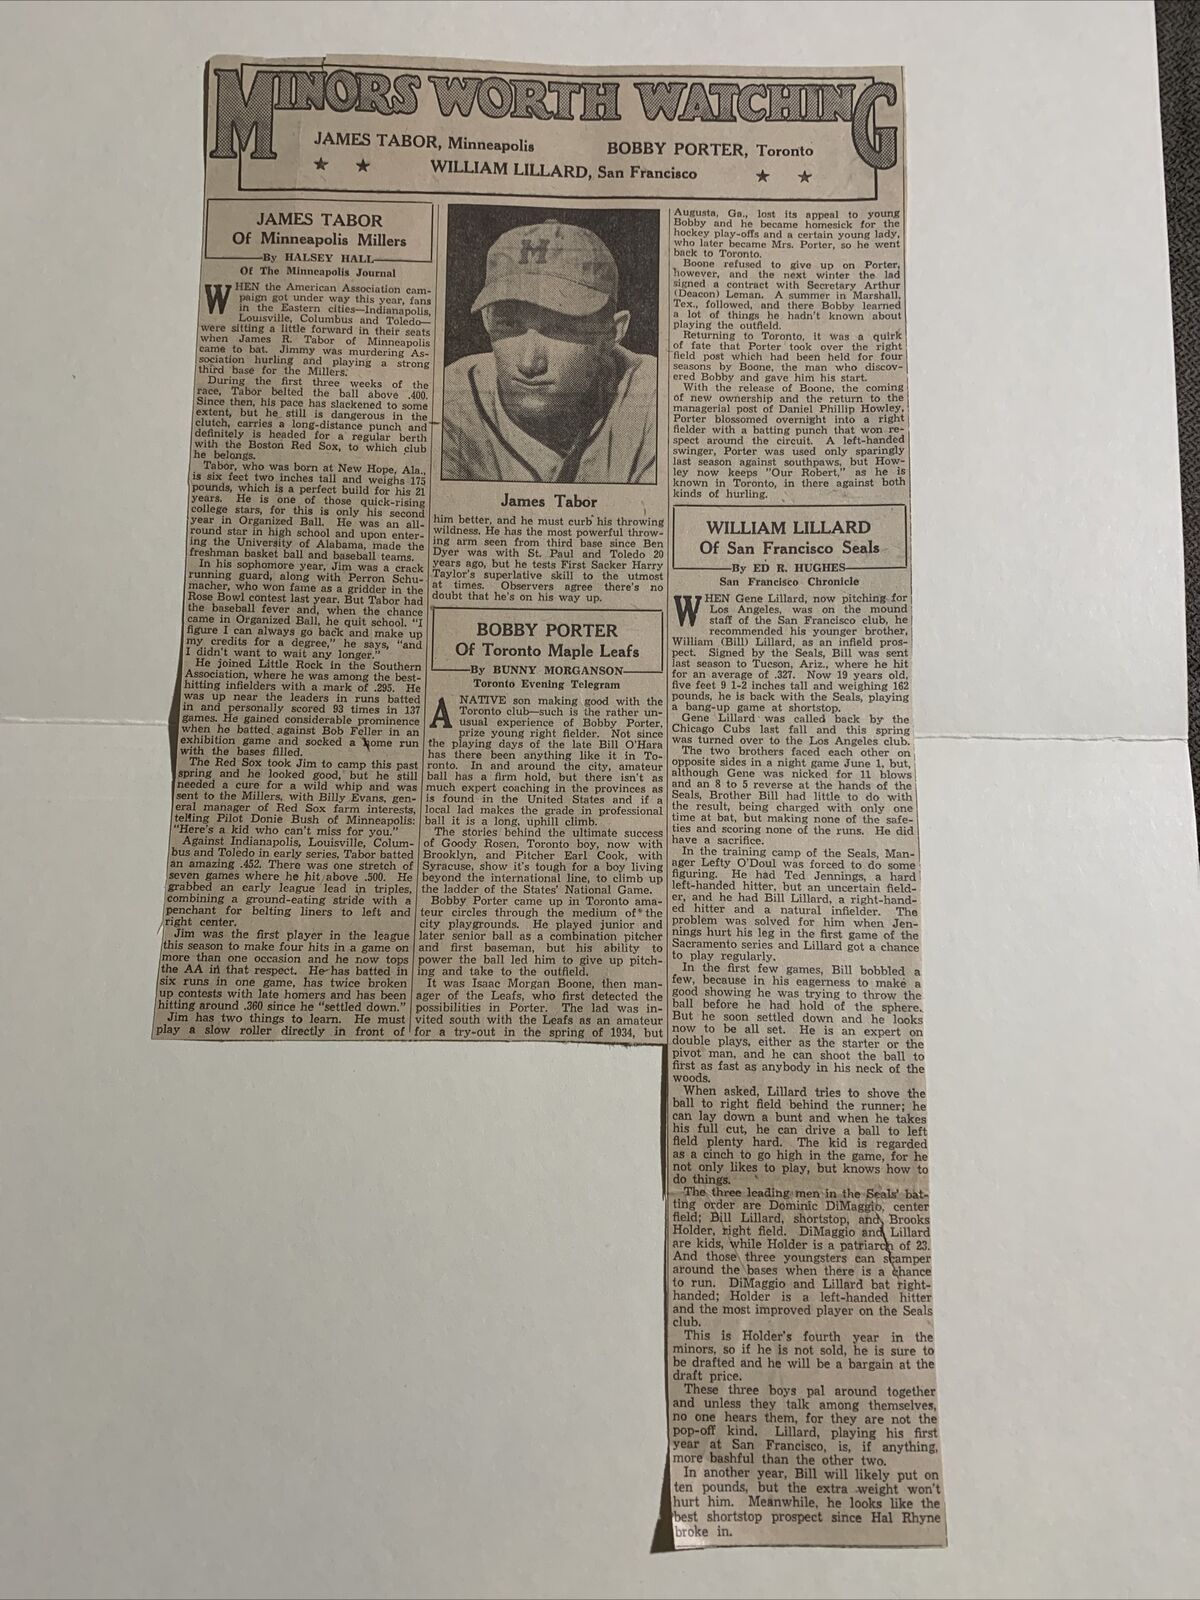 Jim Tabor Minneapolis Millers Minor Lg. 1938 Sporting News Baseball 7X13 Panel